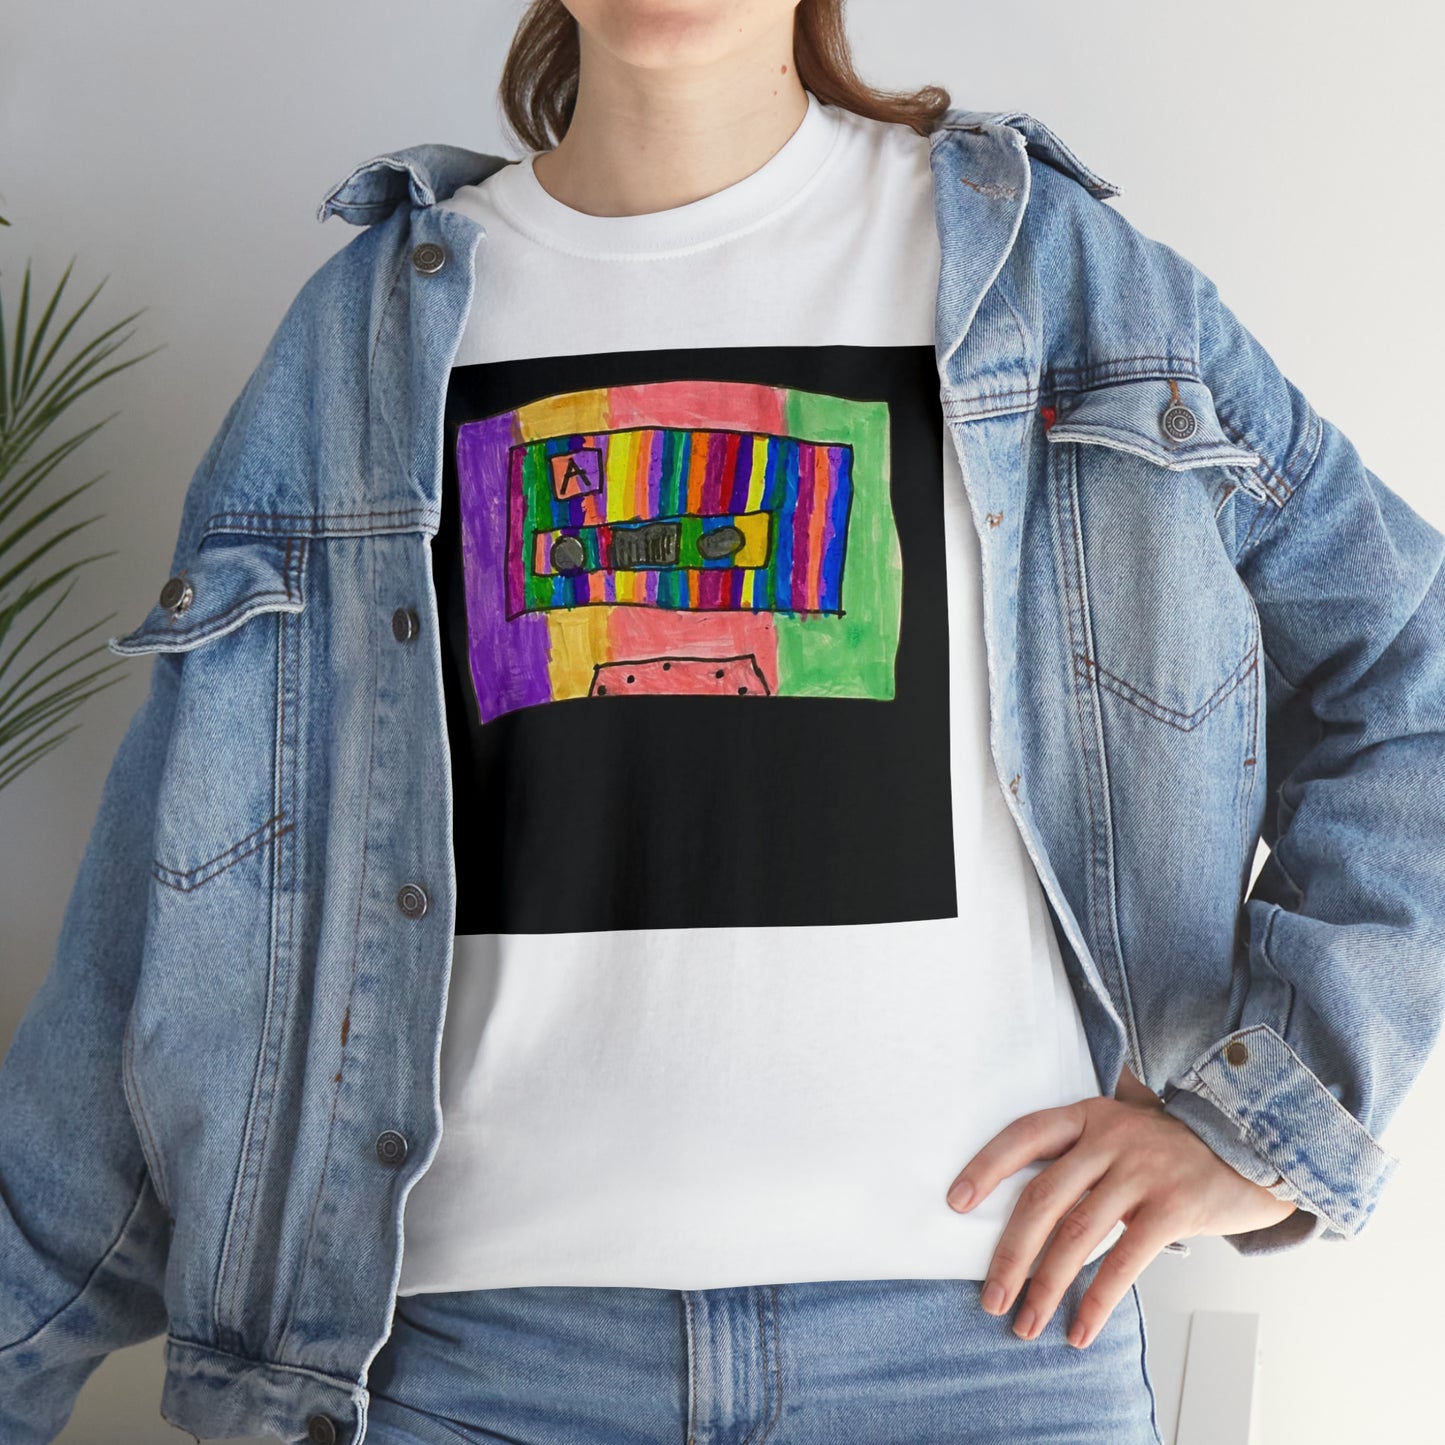 Camiseta Kawaii Cassette Vintage Art Pop Design Camiseta de algodón pesado unisex